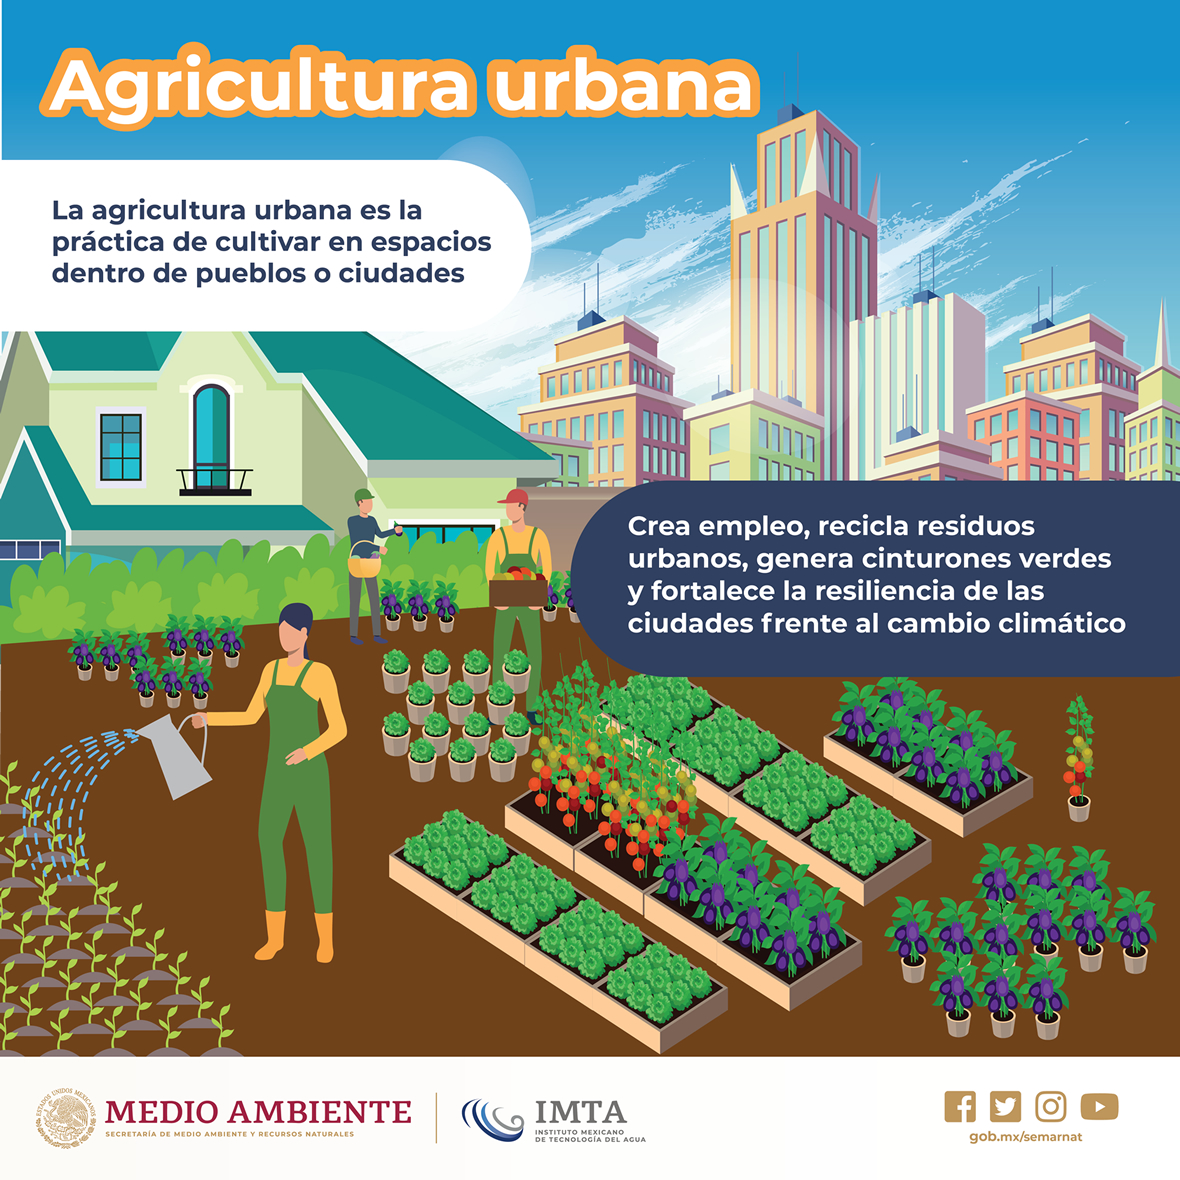 /cms/uploads/image/file/534784/Agricultura_urbana2.jpg